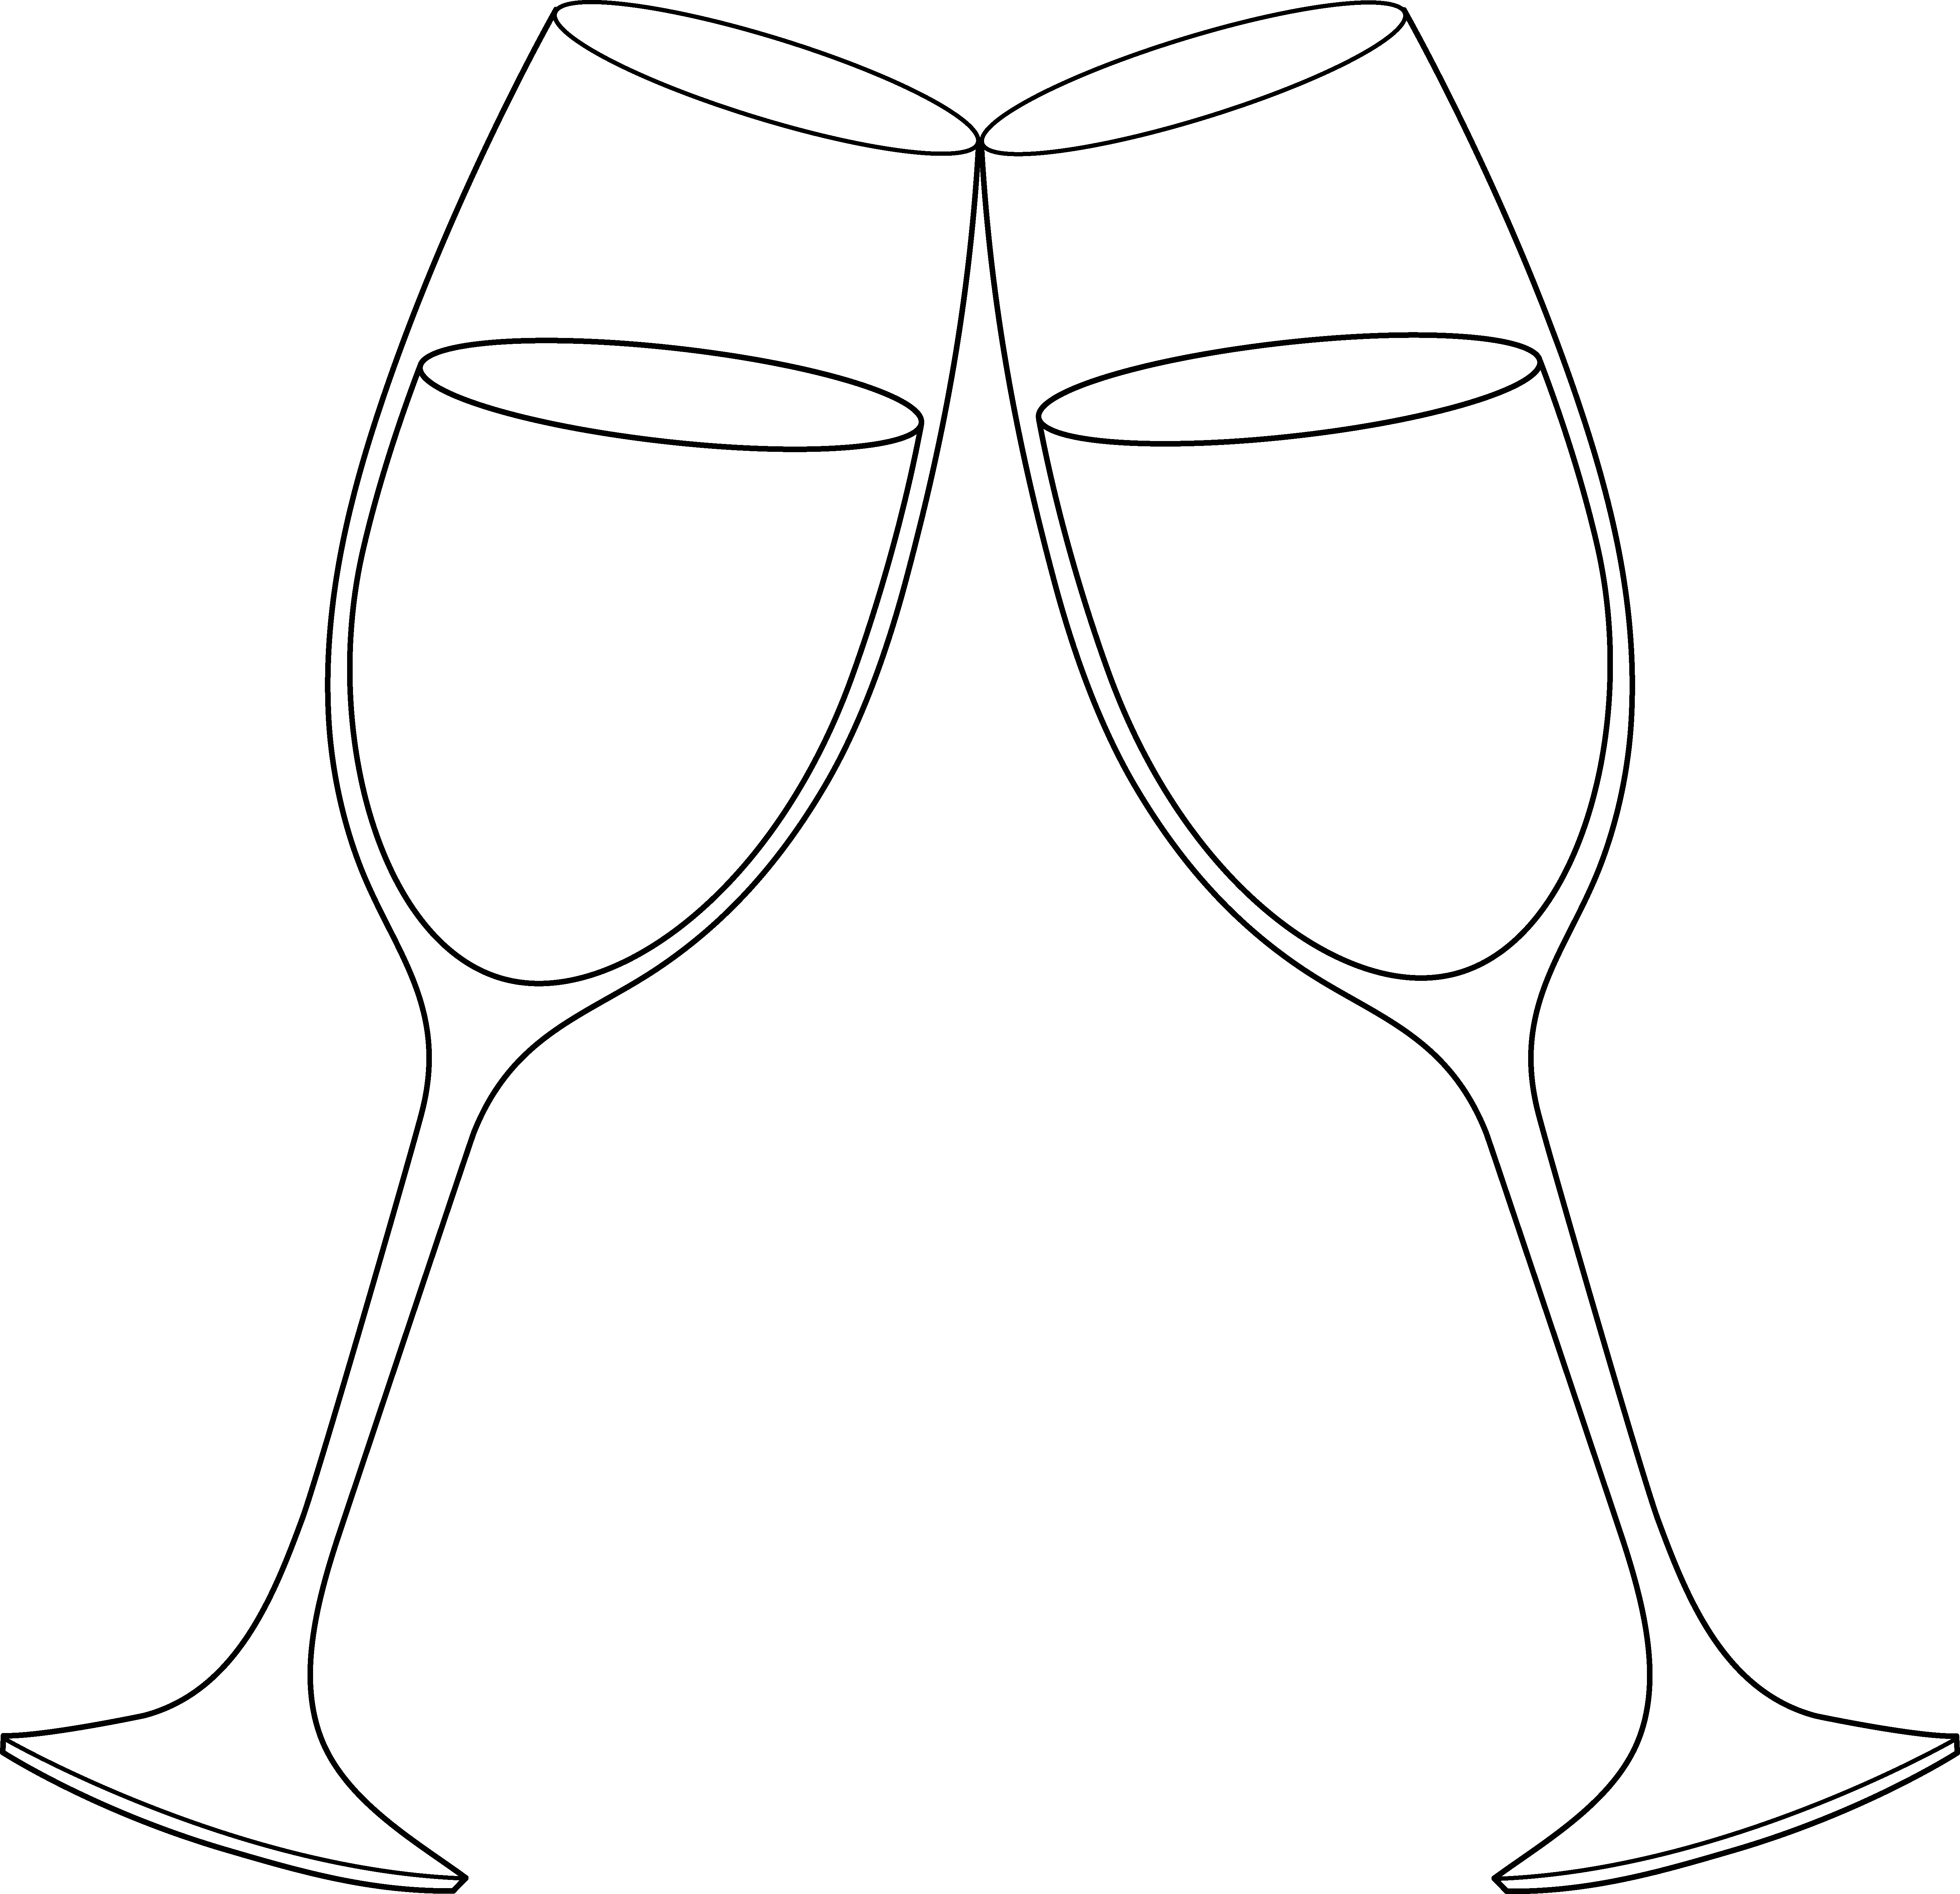 Square clipart toast. Champagne glasses line art